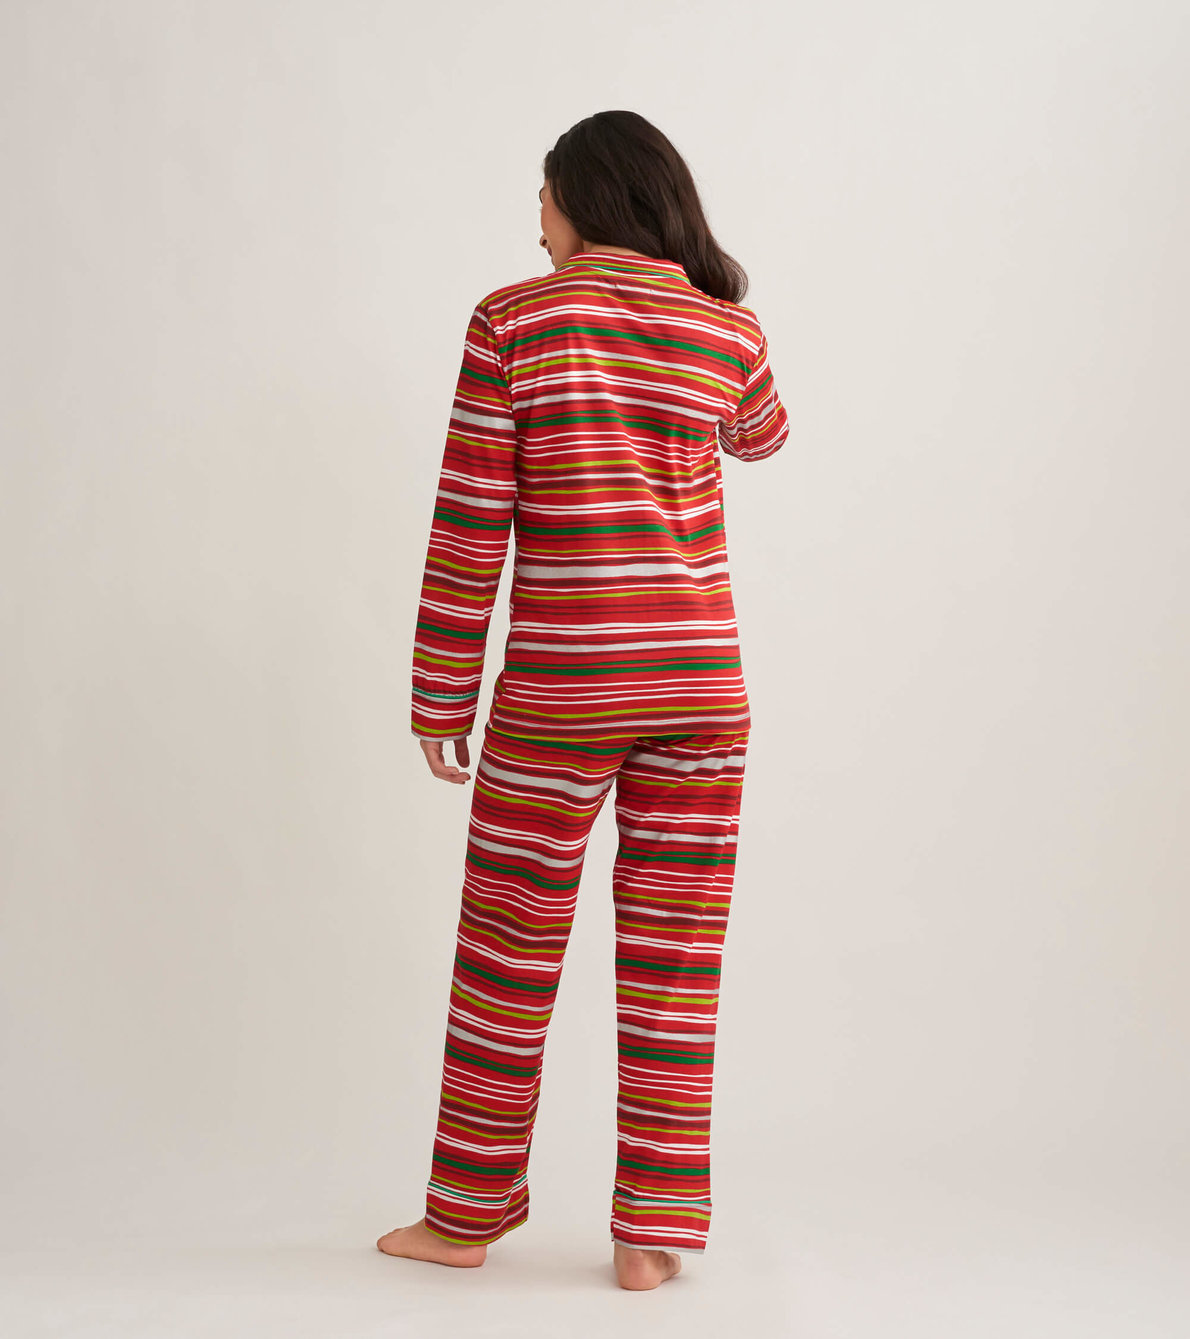 View larger image of Holiday Stripes Women's Pajama Set